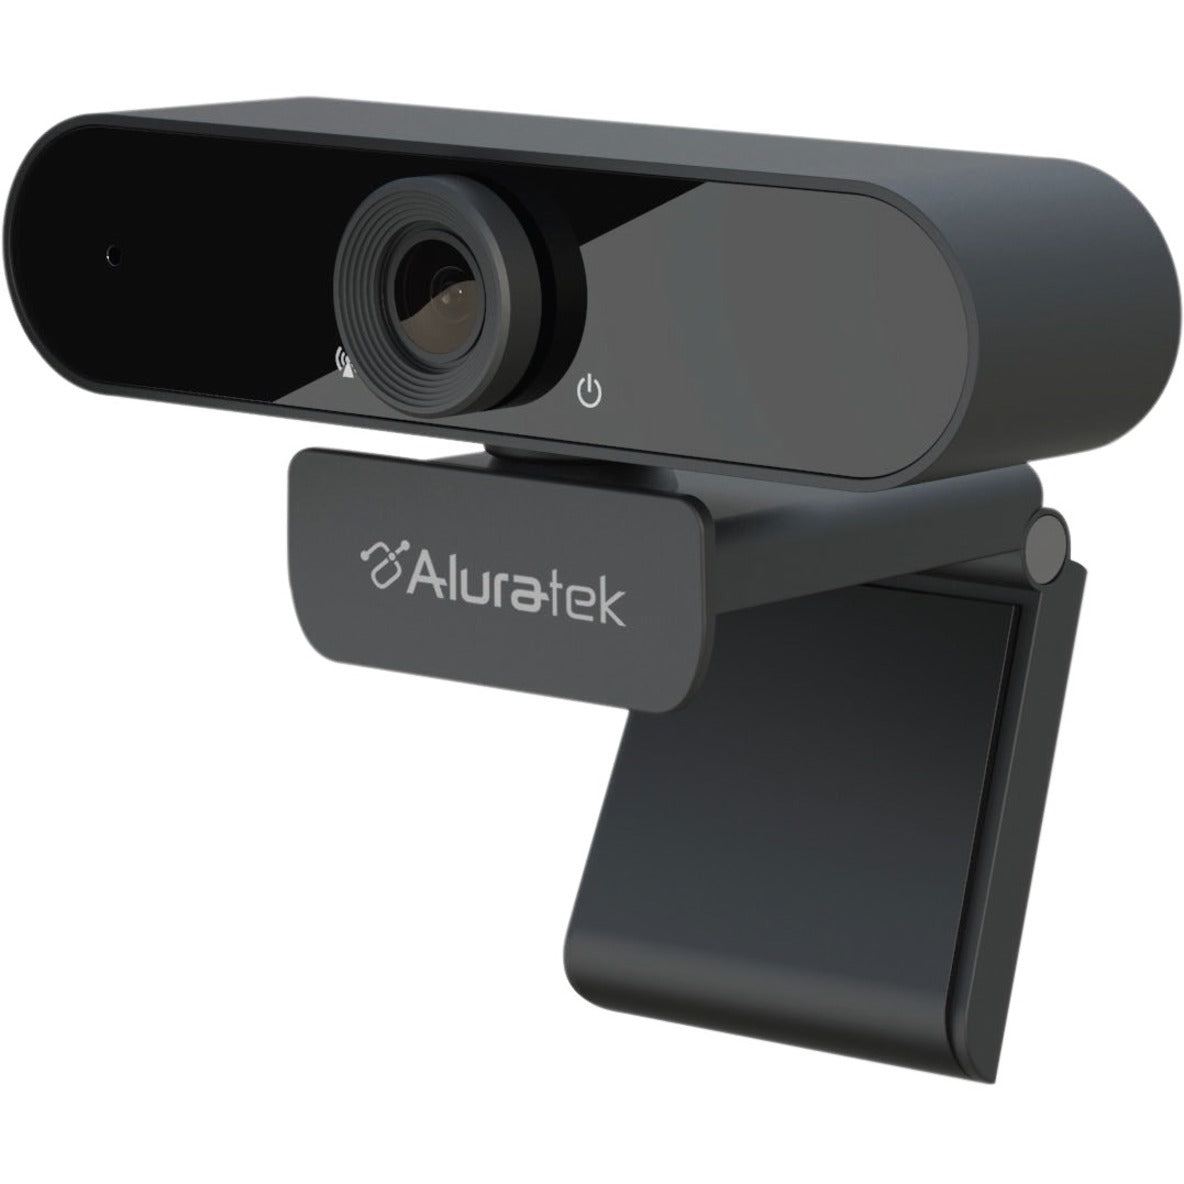 Aluratek AWC03F HD 1080p Webcam, 2 Megapixel, 30 fps, USB 2.0 Type A